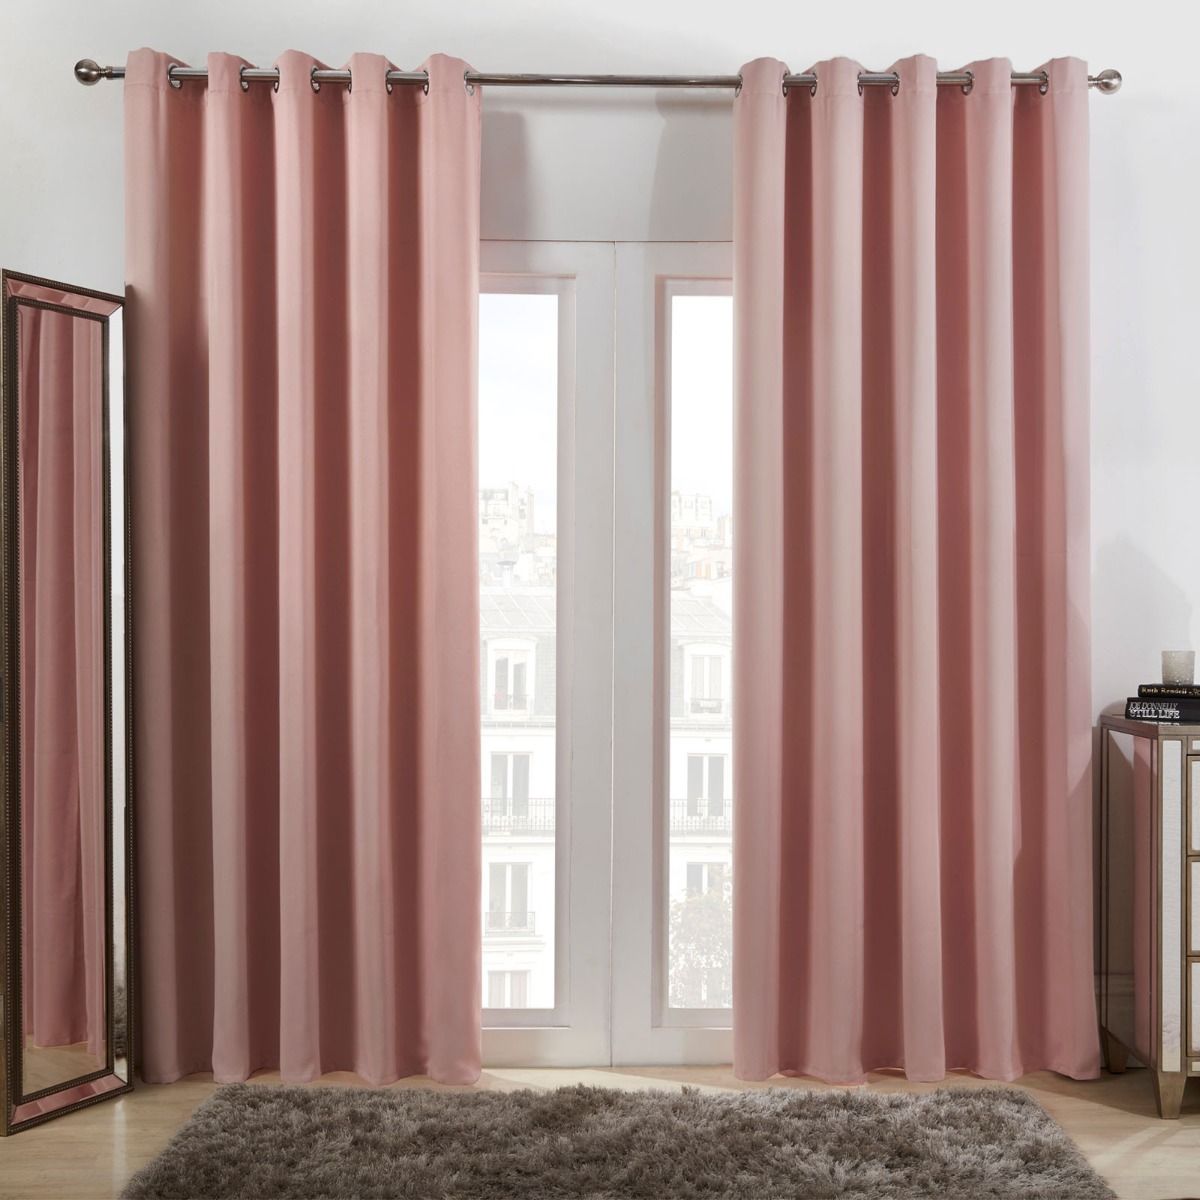 Dreamscene Eyelet Blackout Curtains - Blush Pink, 46" x 54"